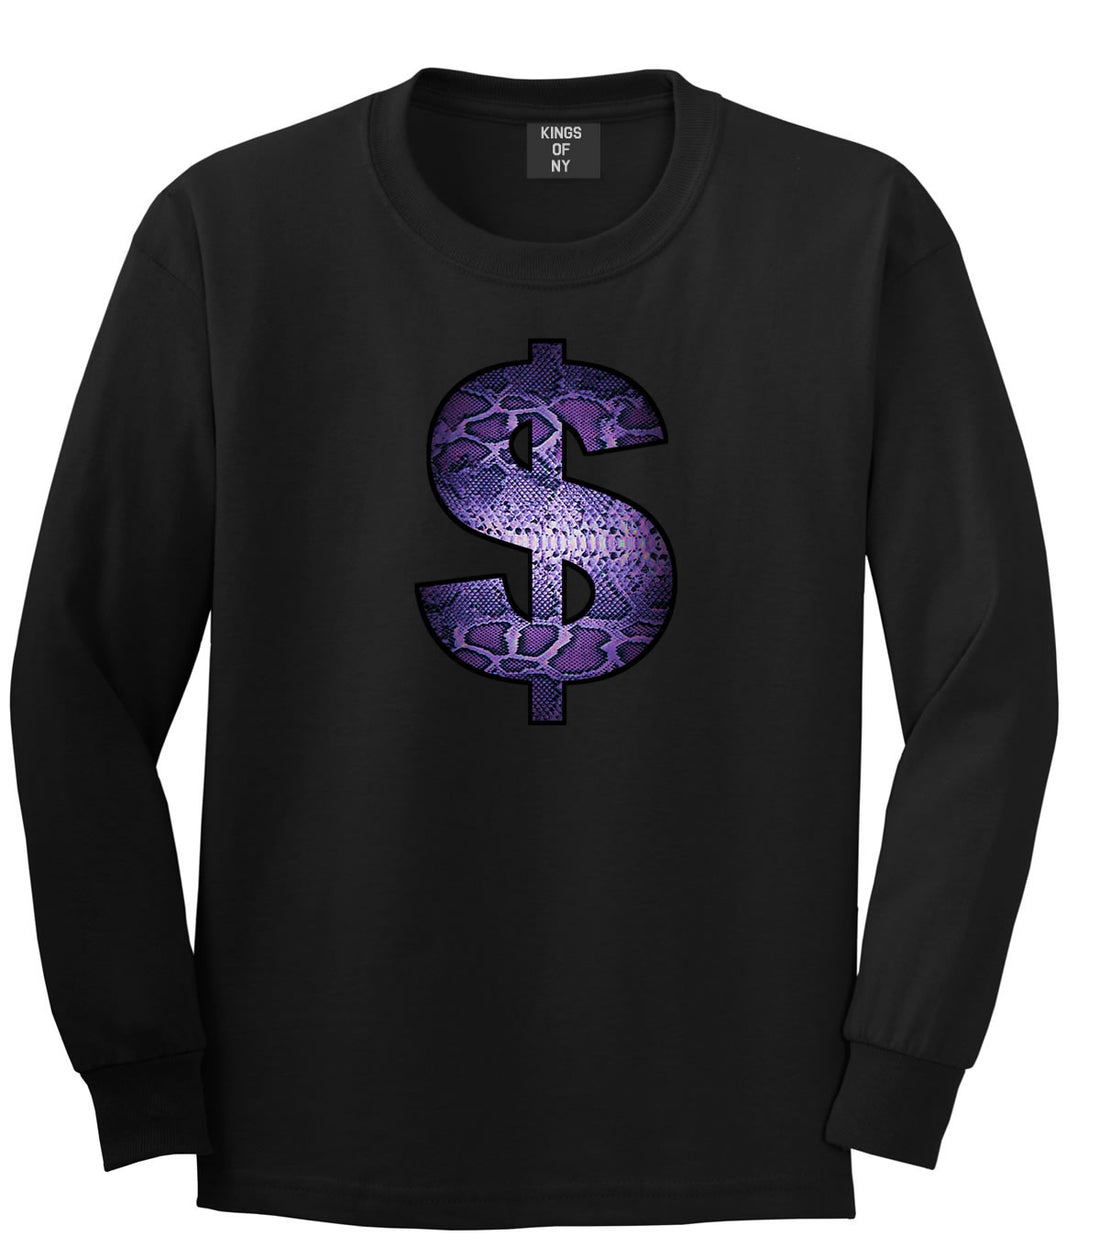 Snakeskin Money Sign Purple Animal Print Long Sleeve T-Shirt In Black by Kings Of NY